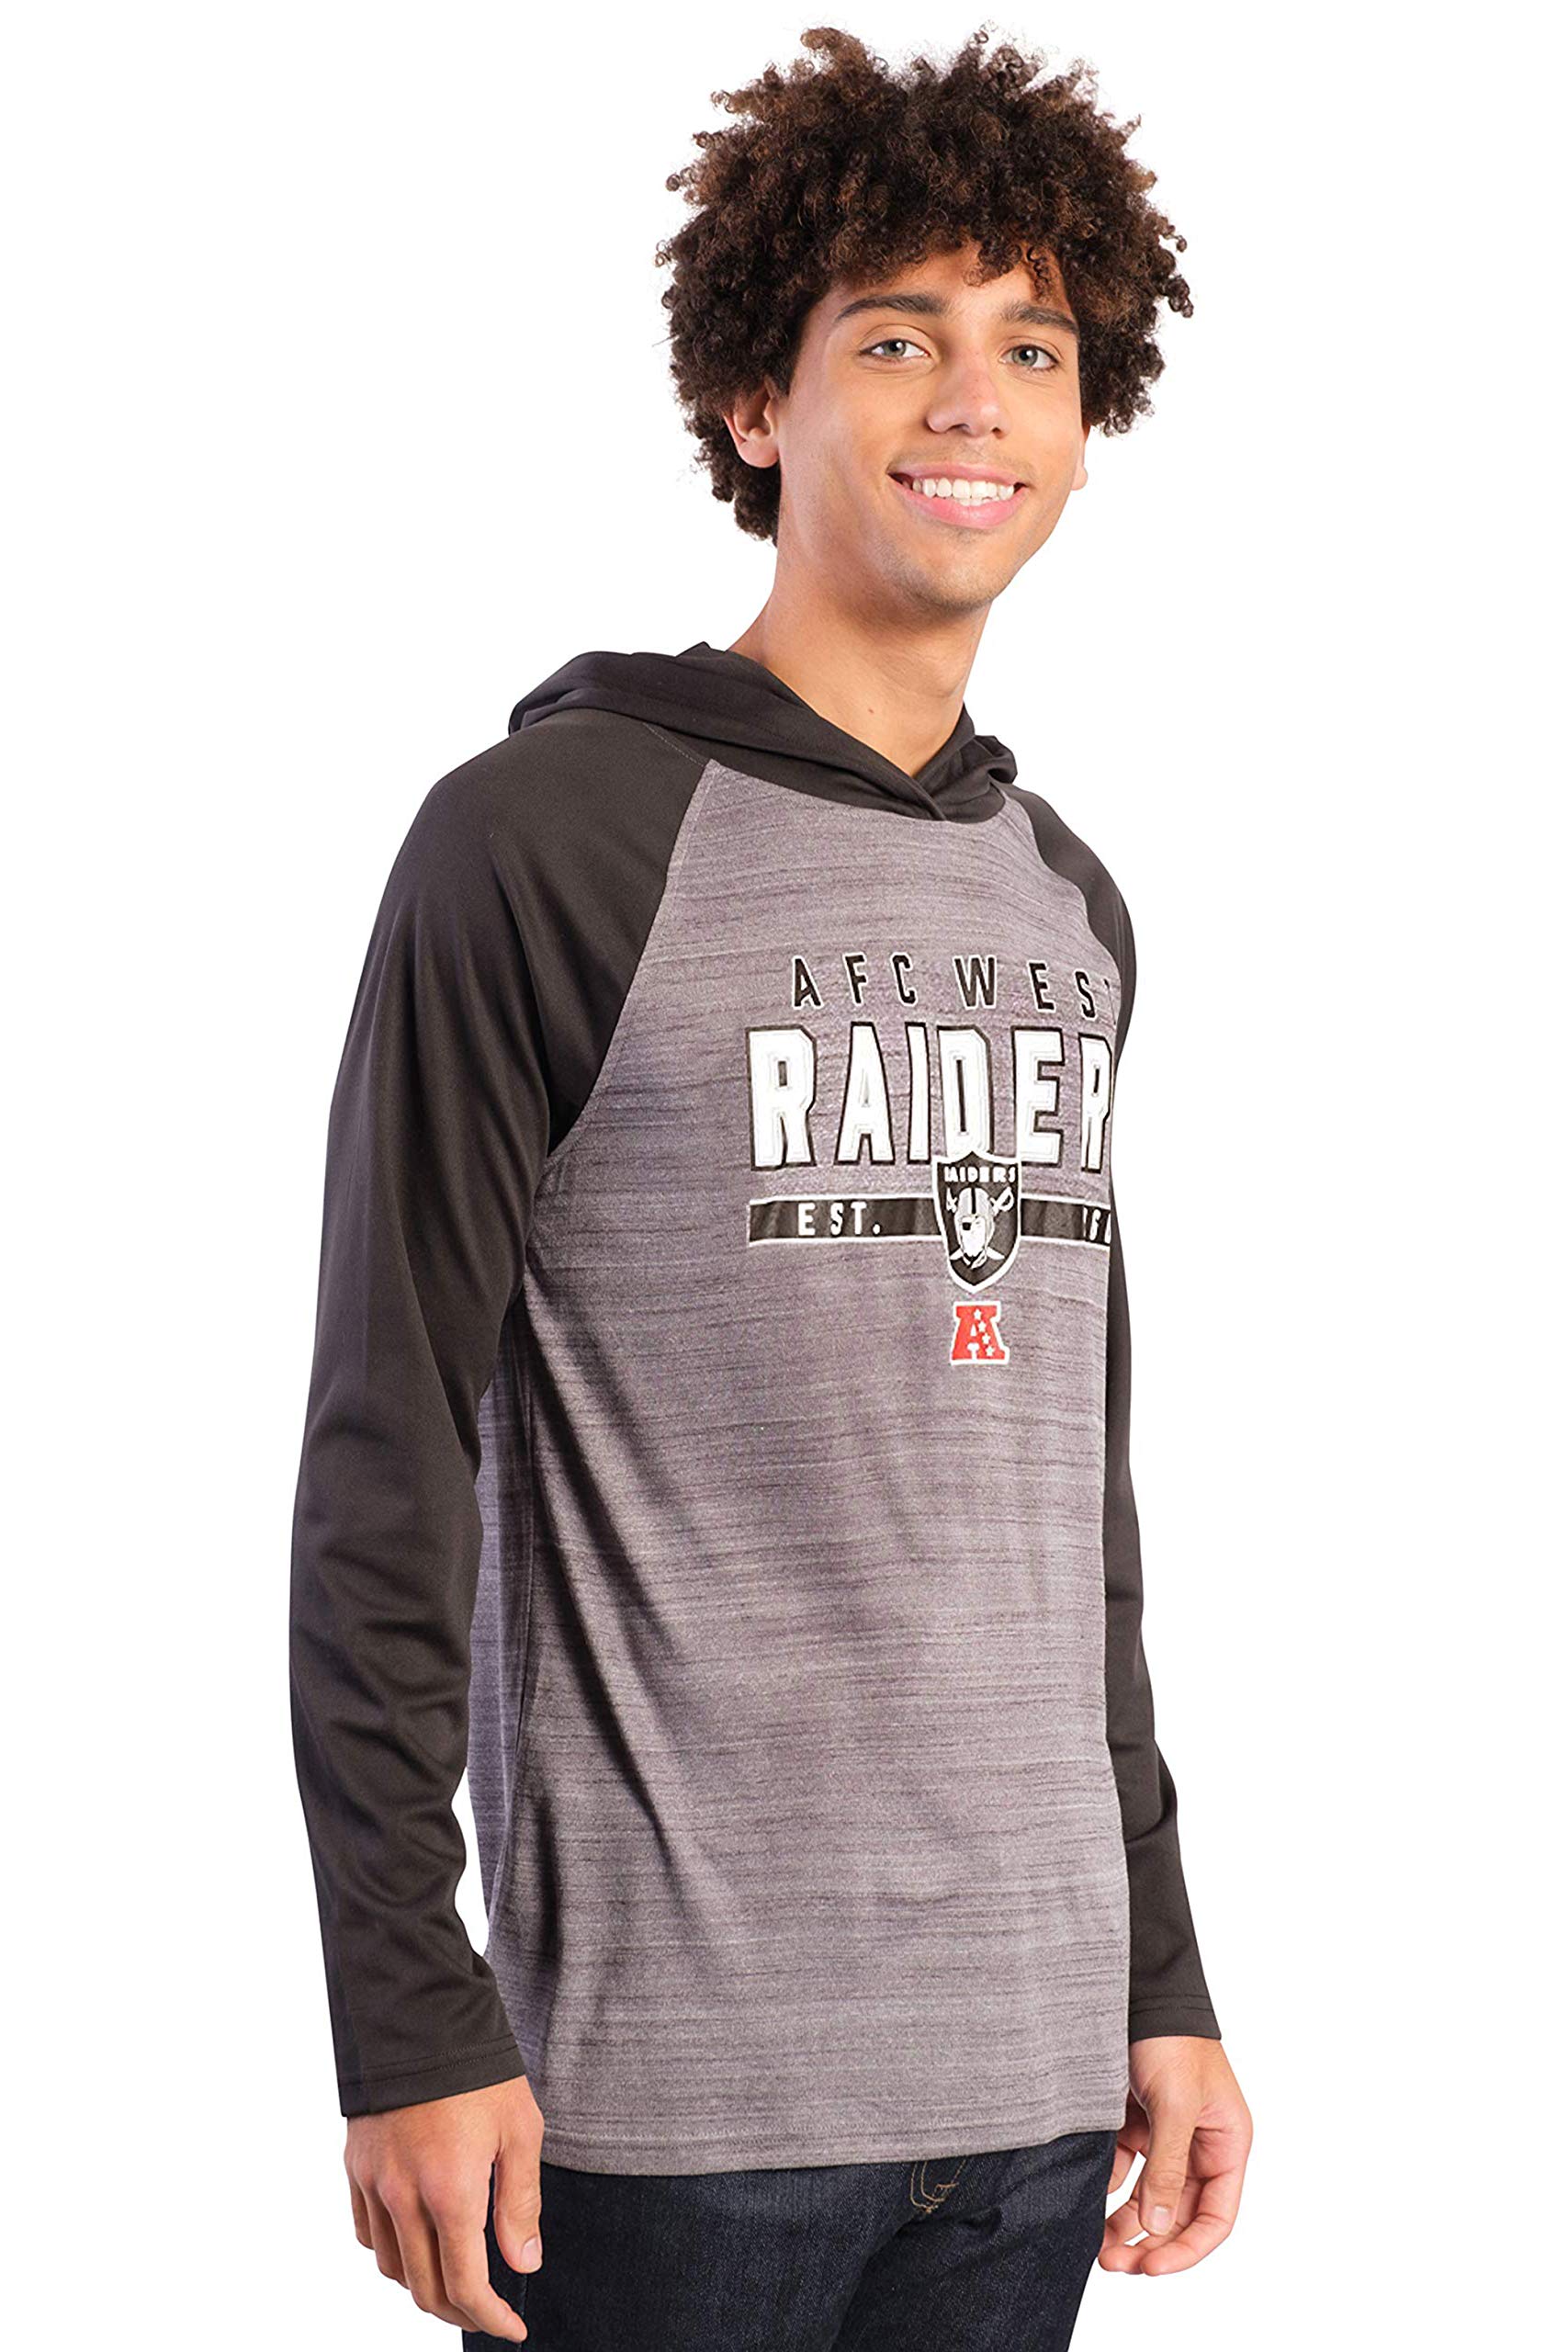 Ultra Game NFL Las Vegas Raiders Mens Athletic Performance Soft Pullover Lightweight Hoodie Sweatshirt|Las Vegas Raiders - UltraGameShop